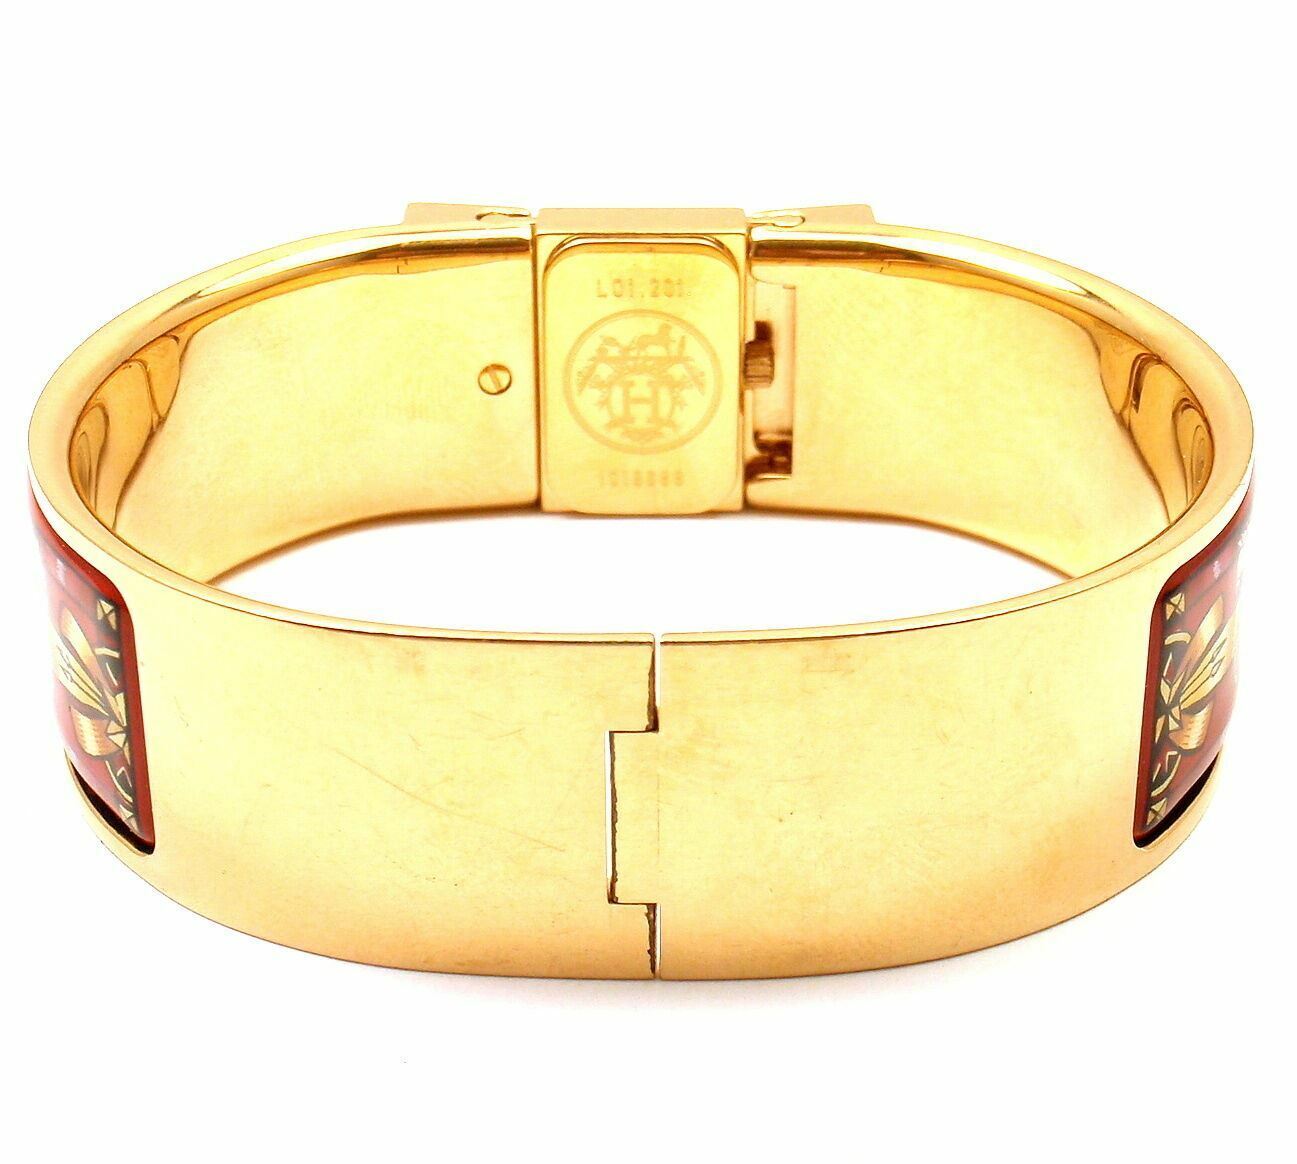 Authentic! Hermes Loquet Red Horse Equestrian Motif Bangle Bracelet Watch